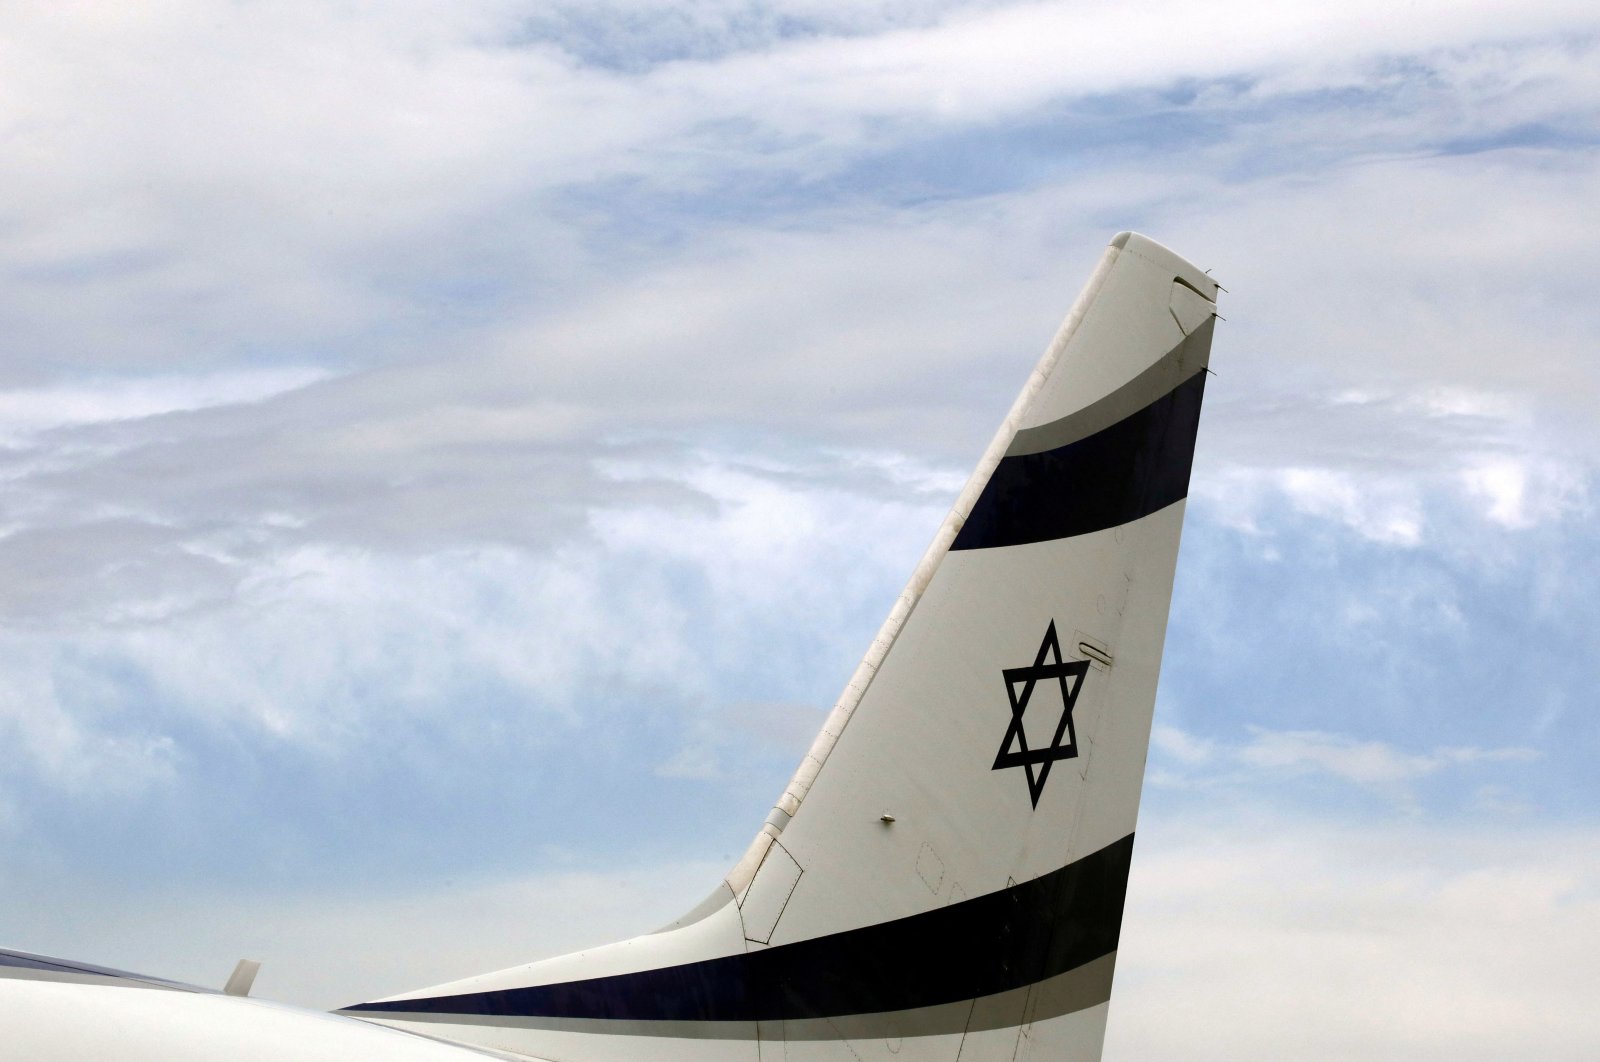 An Israel El Al airlines plane is seen after landing in Nice, France, April 4, 2019. (Reuters Photo)